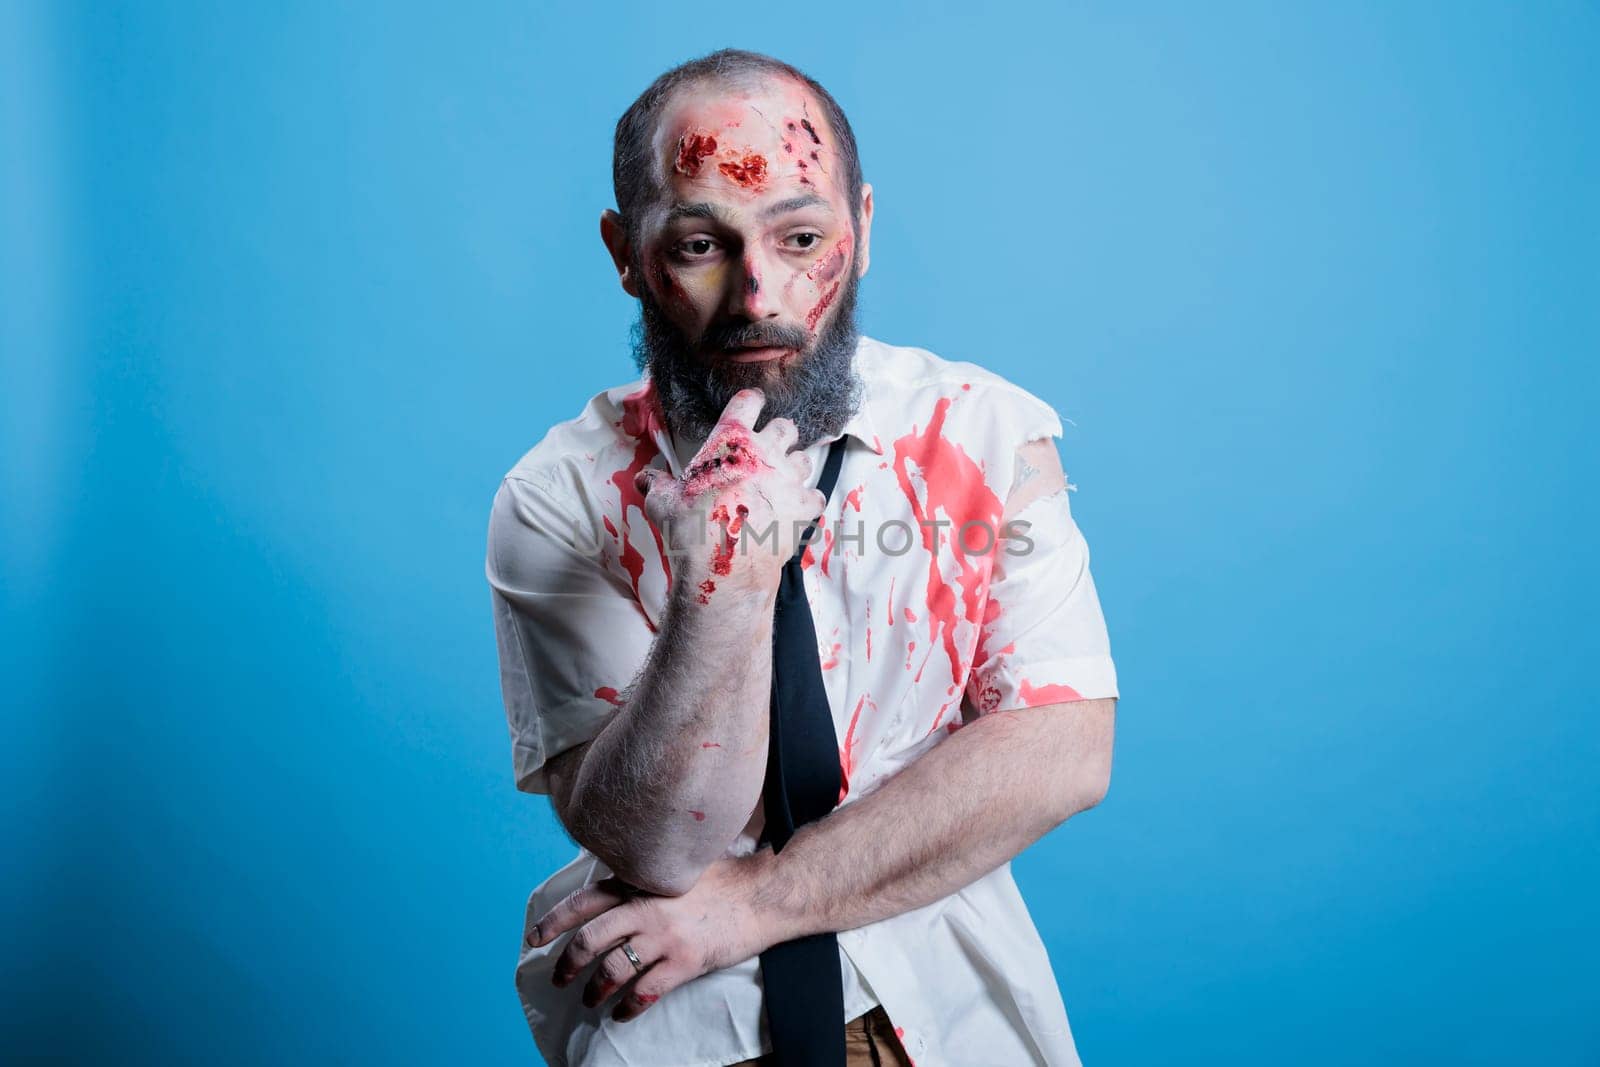 Actor dressed as horror movie zombie repeating lines between scenes on set by DCStudio